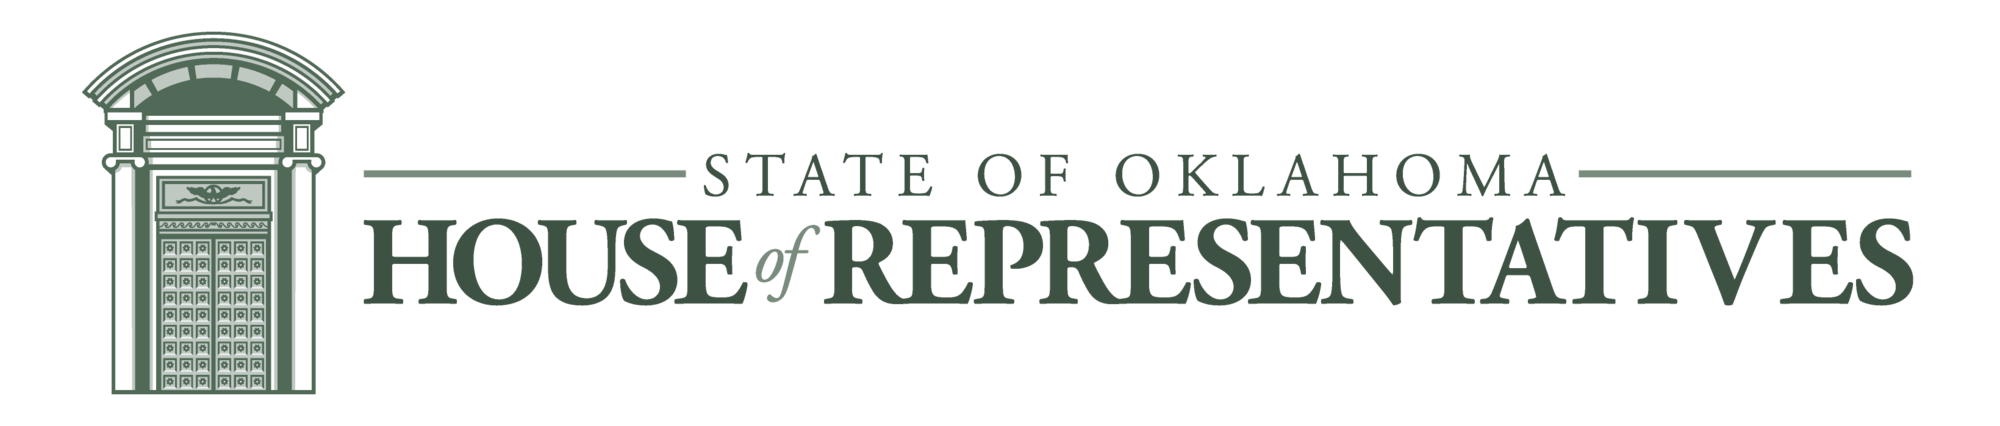 Oklahoma House of Representatives Banner